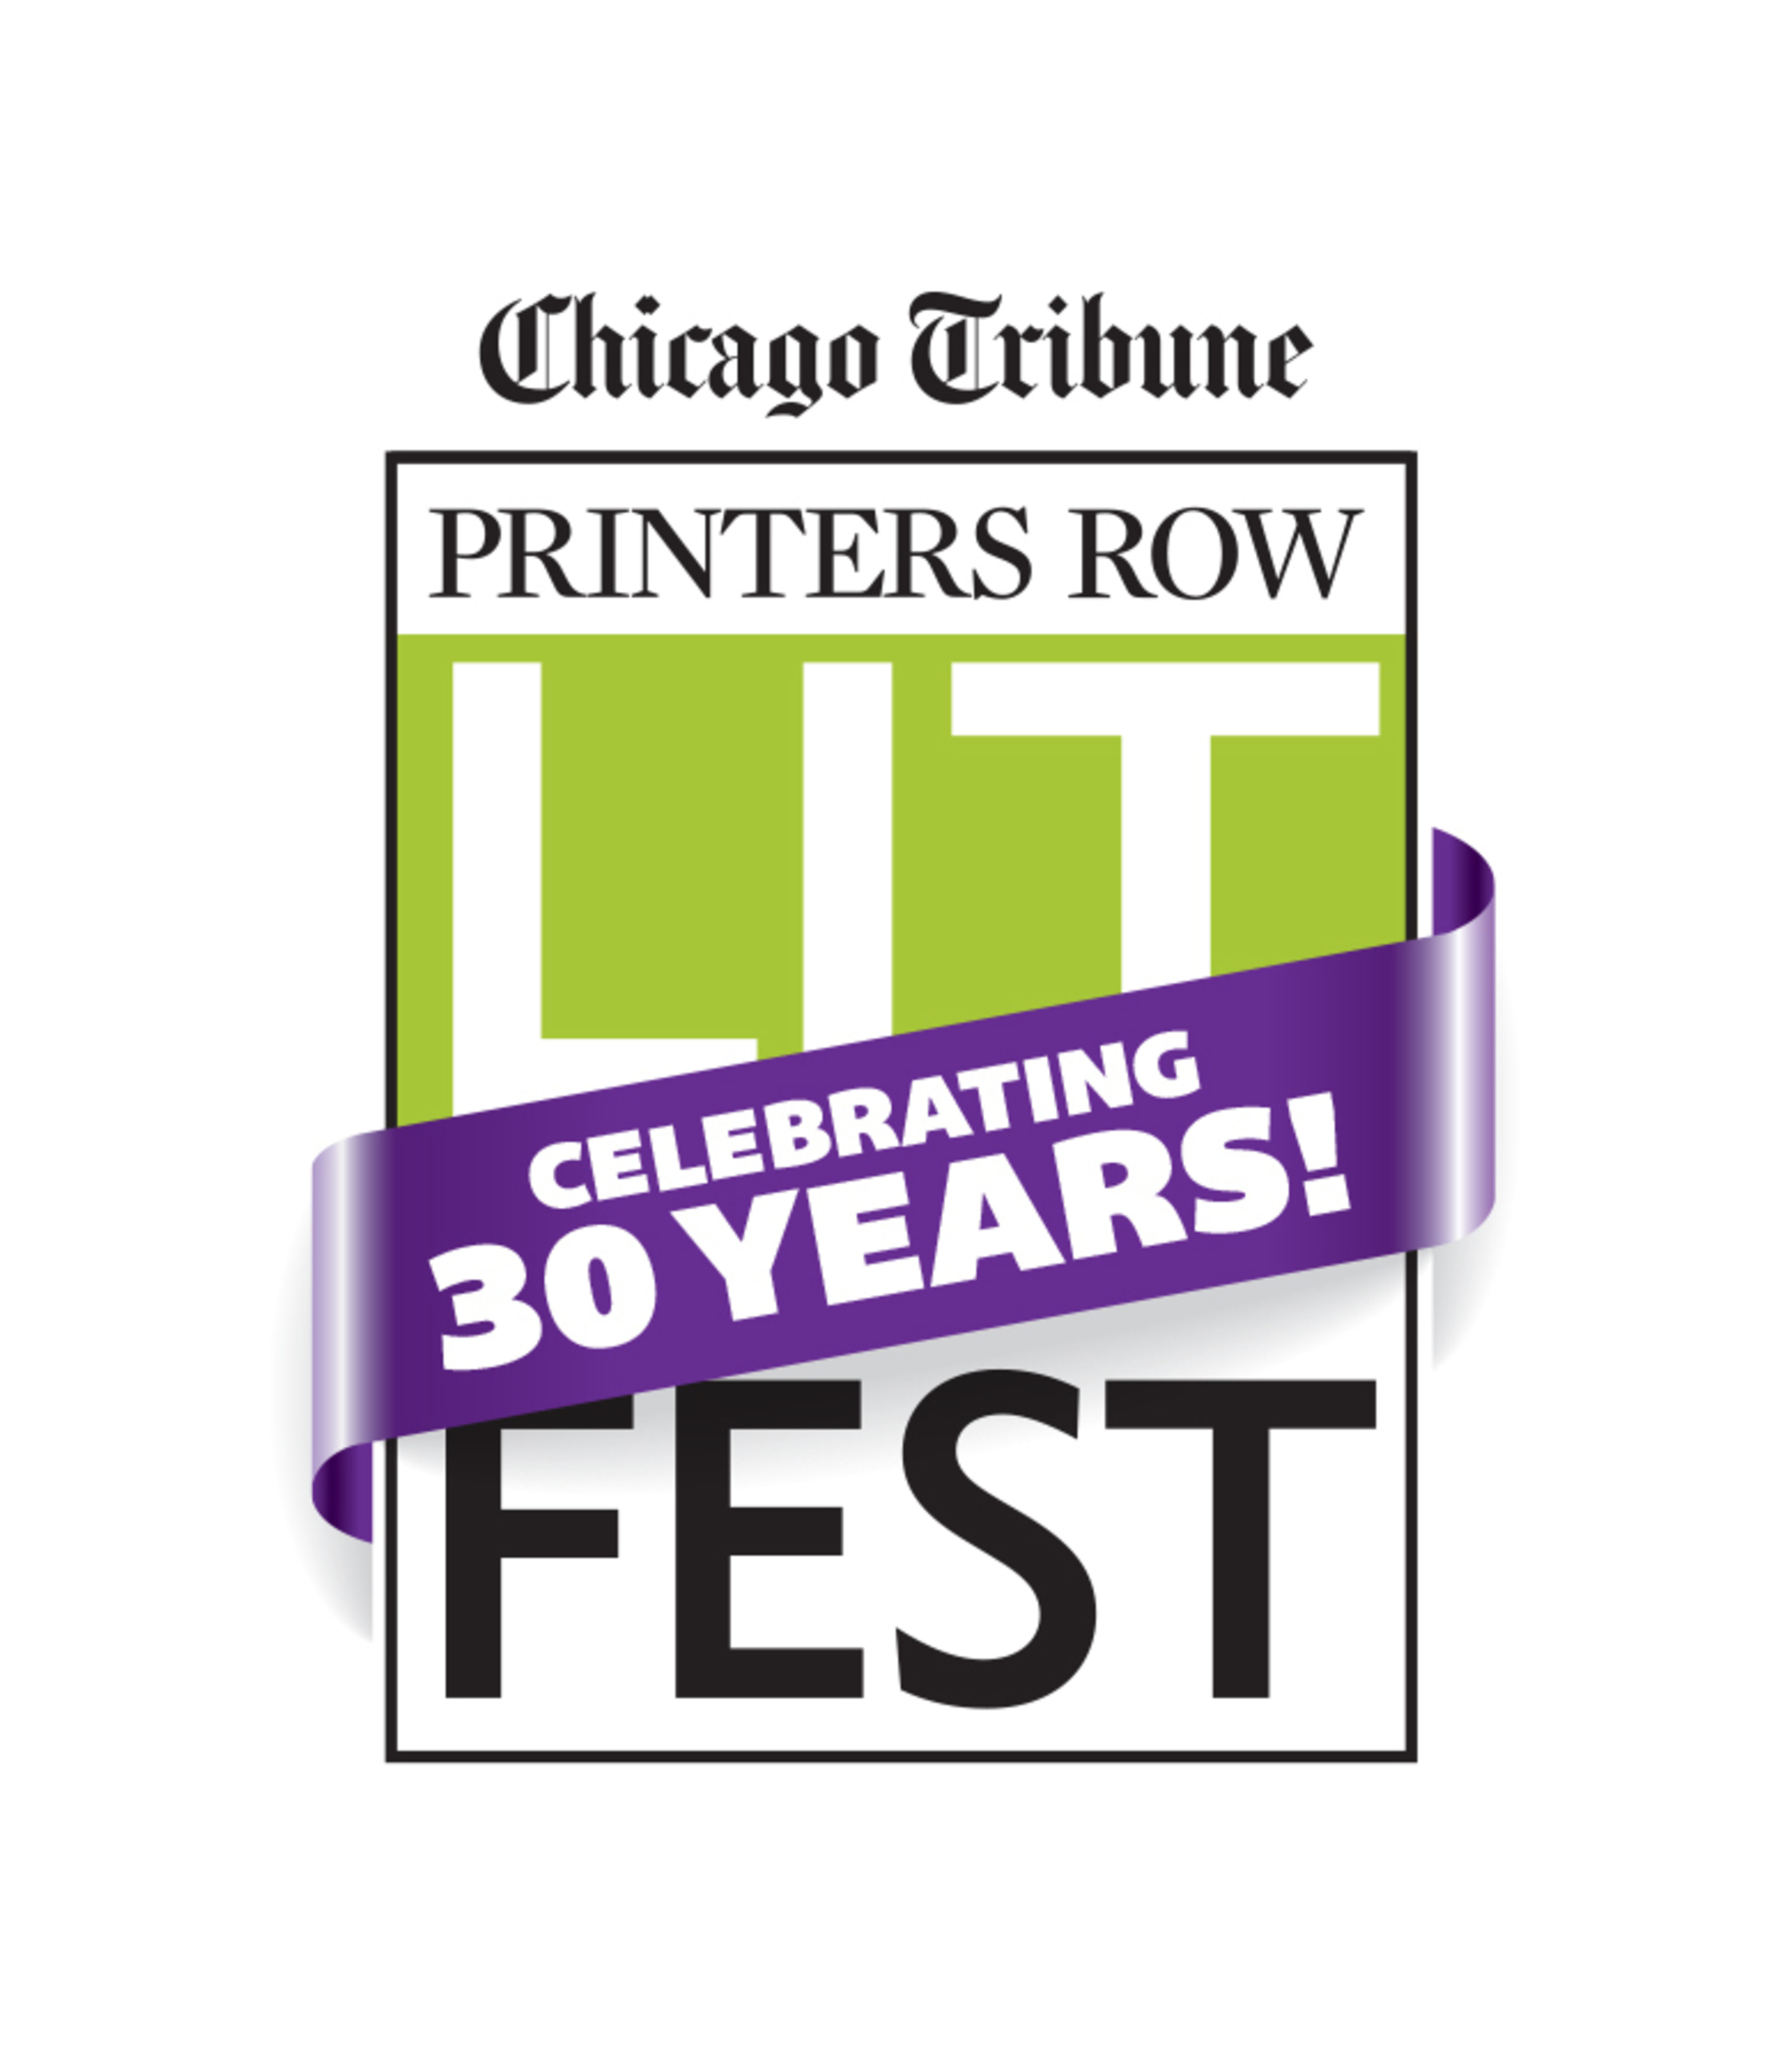 Chicago Tribune celebrates the 30th anniversary of Printers Row Lit Fest, June 7 & 8 (PRNewsFoto/Chicago Tribune)